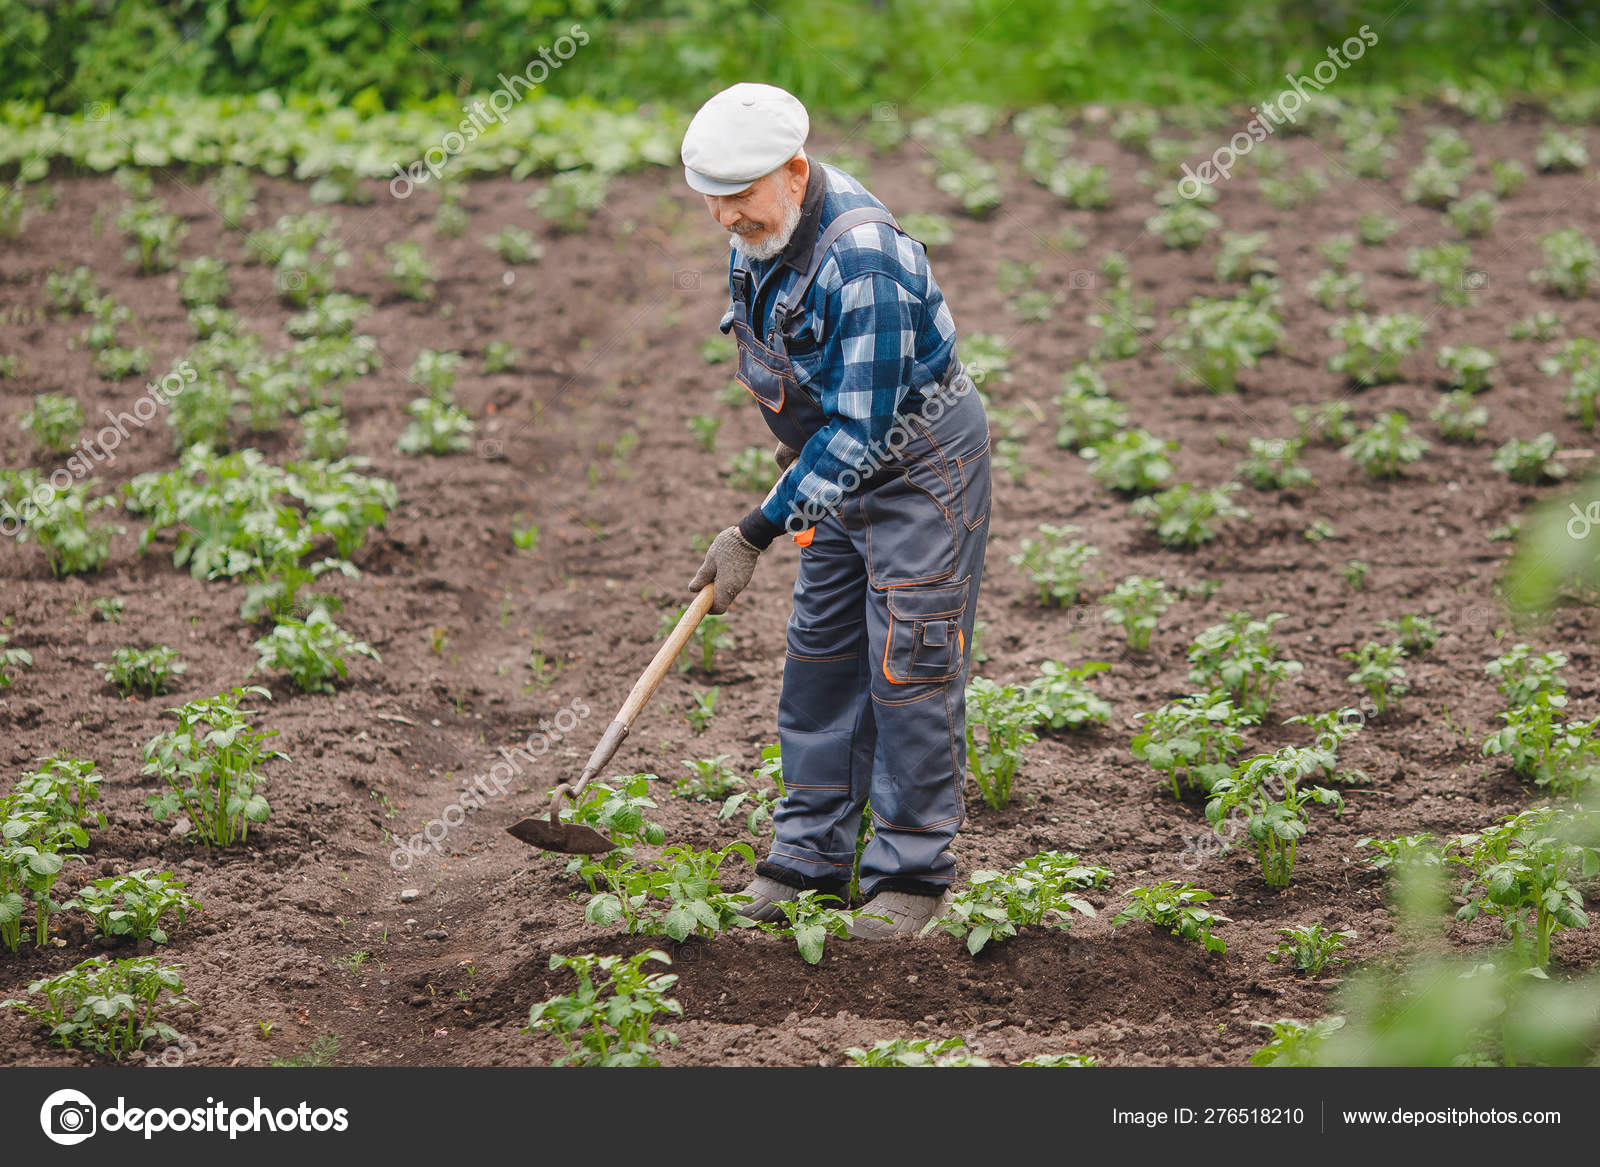 Removing Weeds From Soil Of Potatoes Senior Elderly Man Wielding